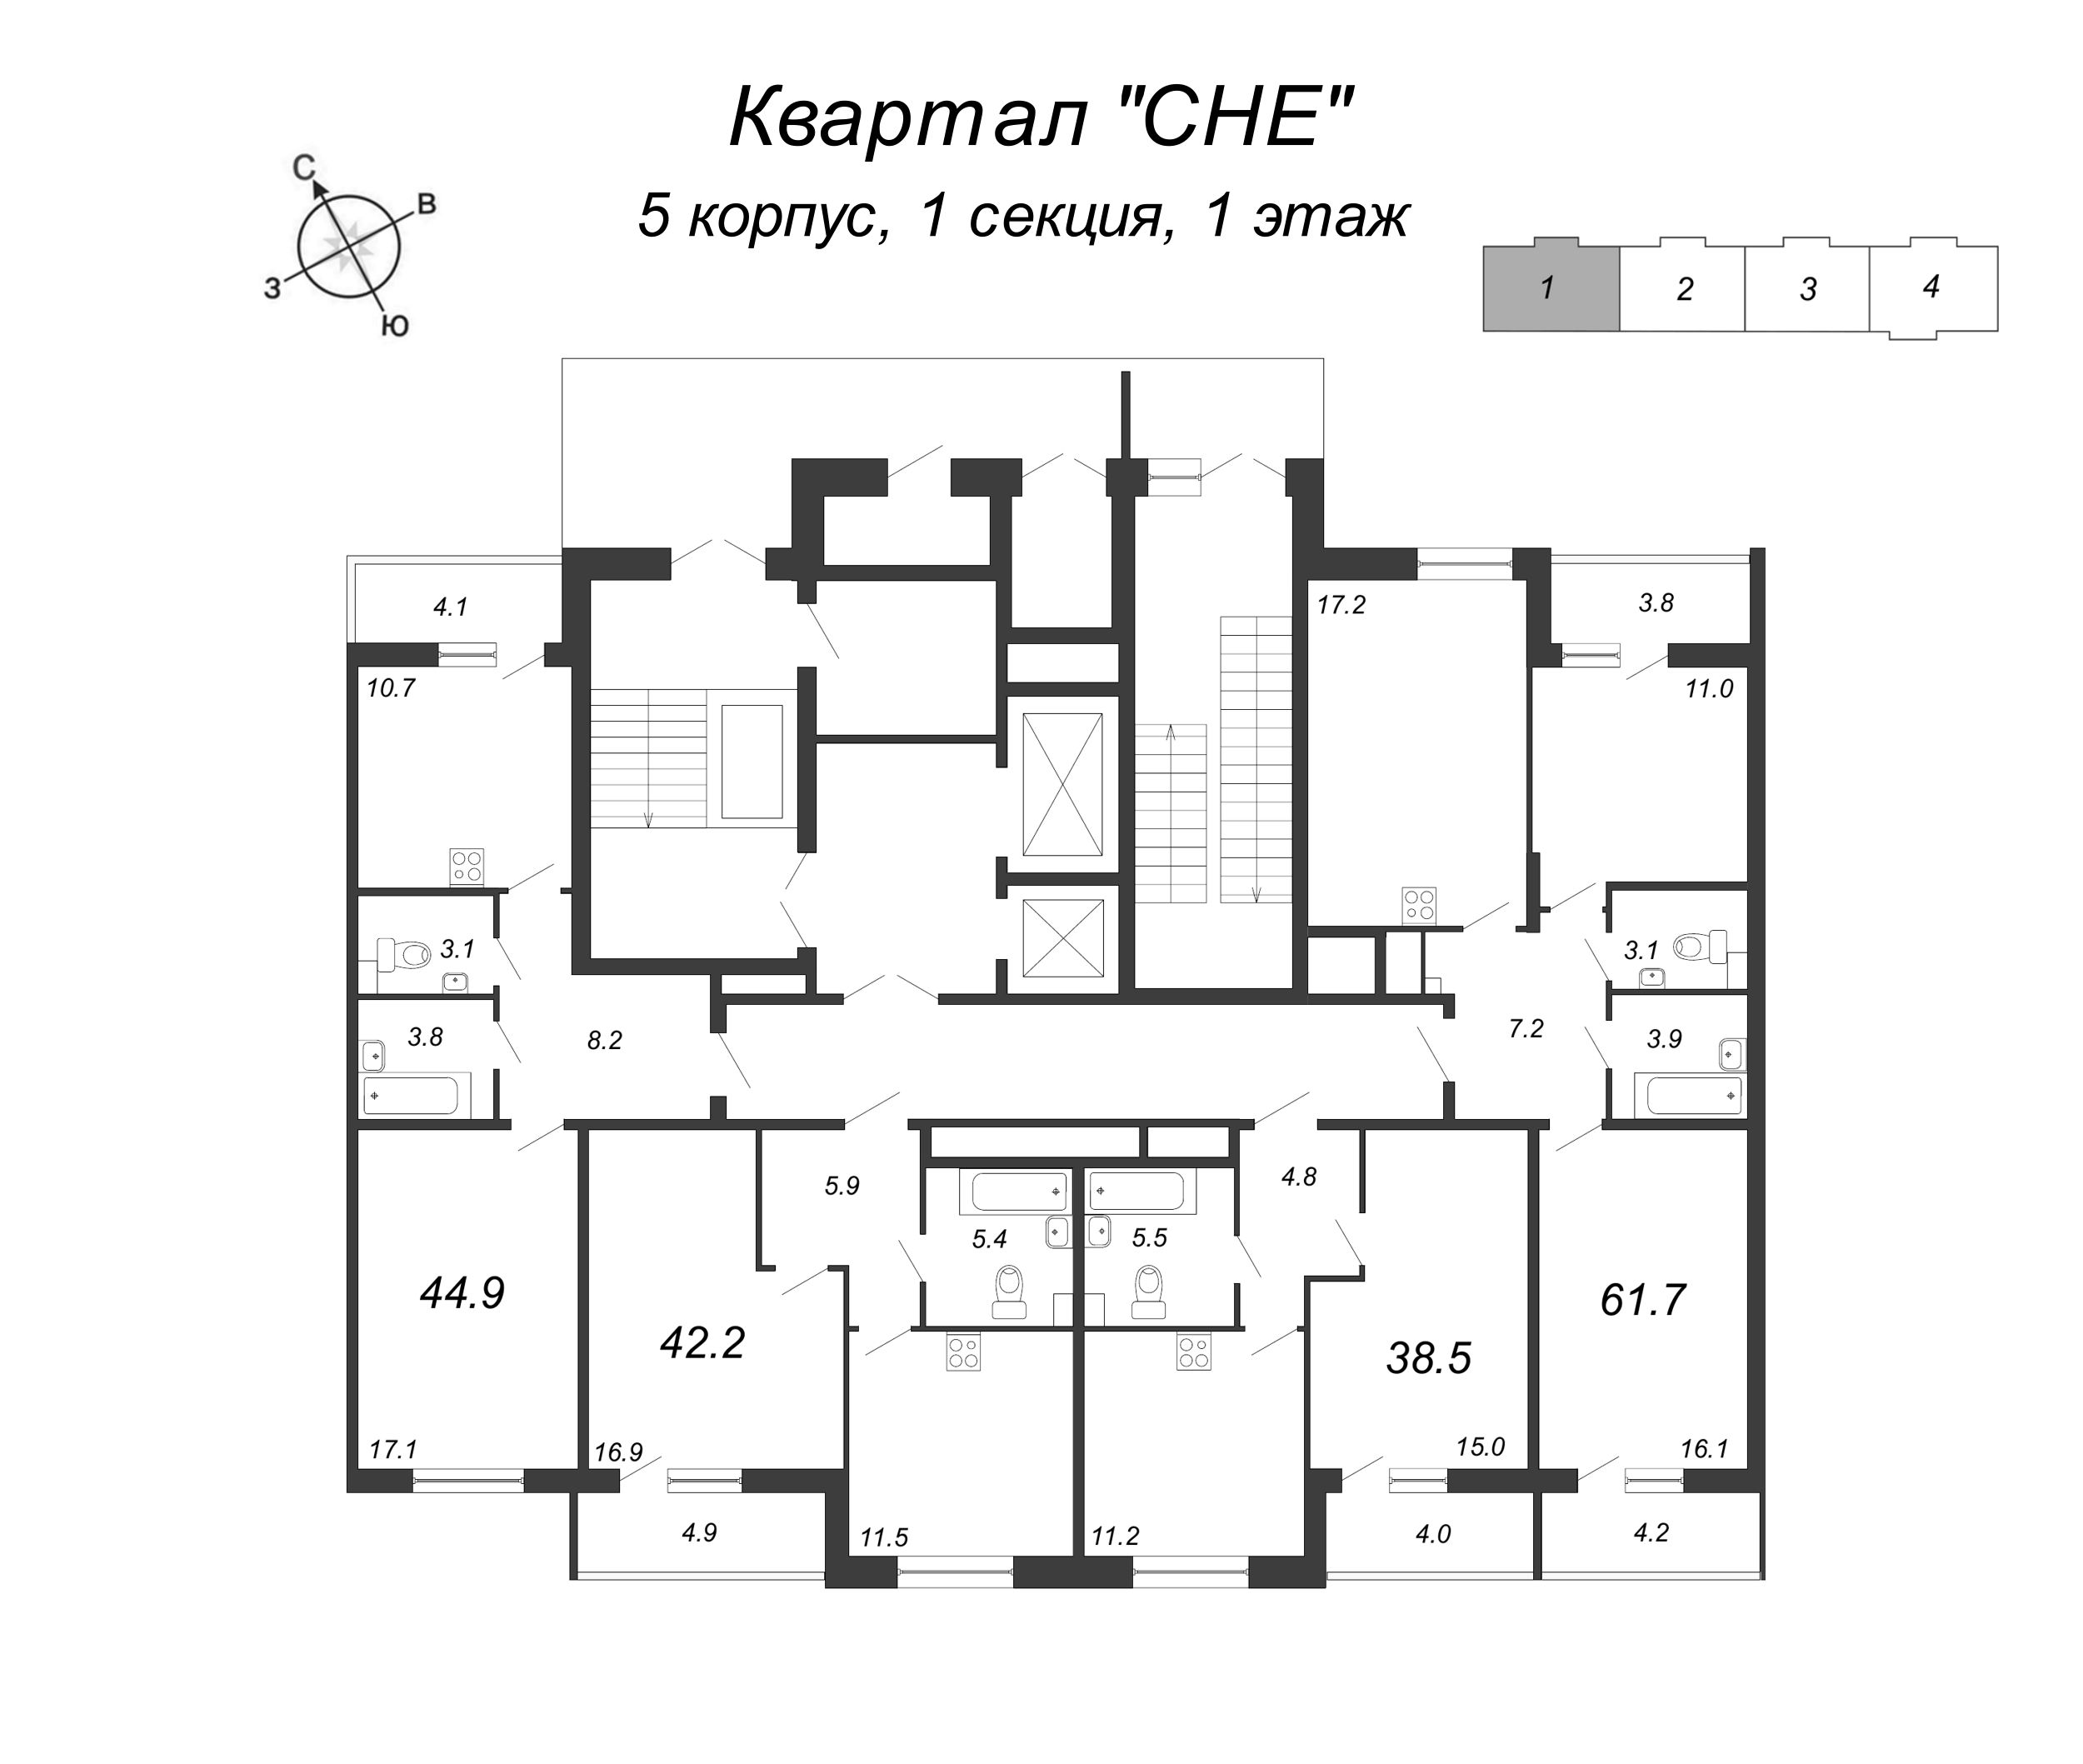 1-комнатная квартира, 38.6 м² в ЖК "Квартал Che" - планировка этажа